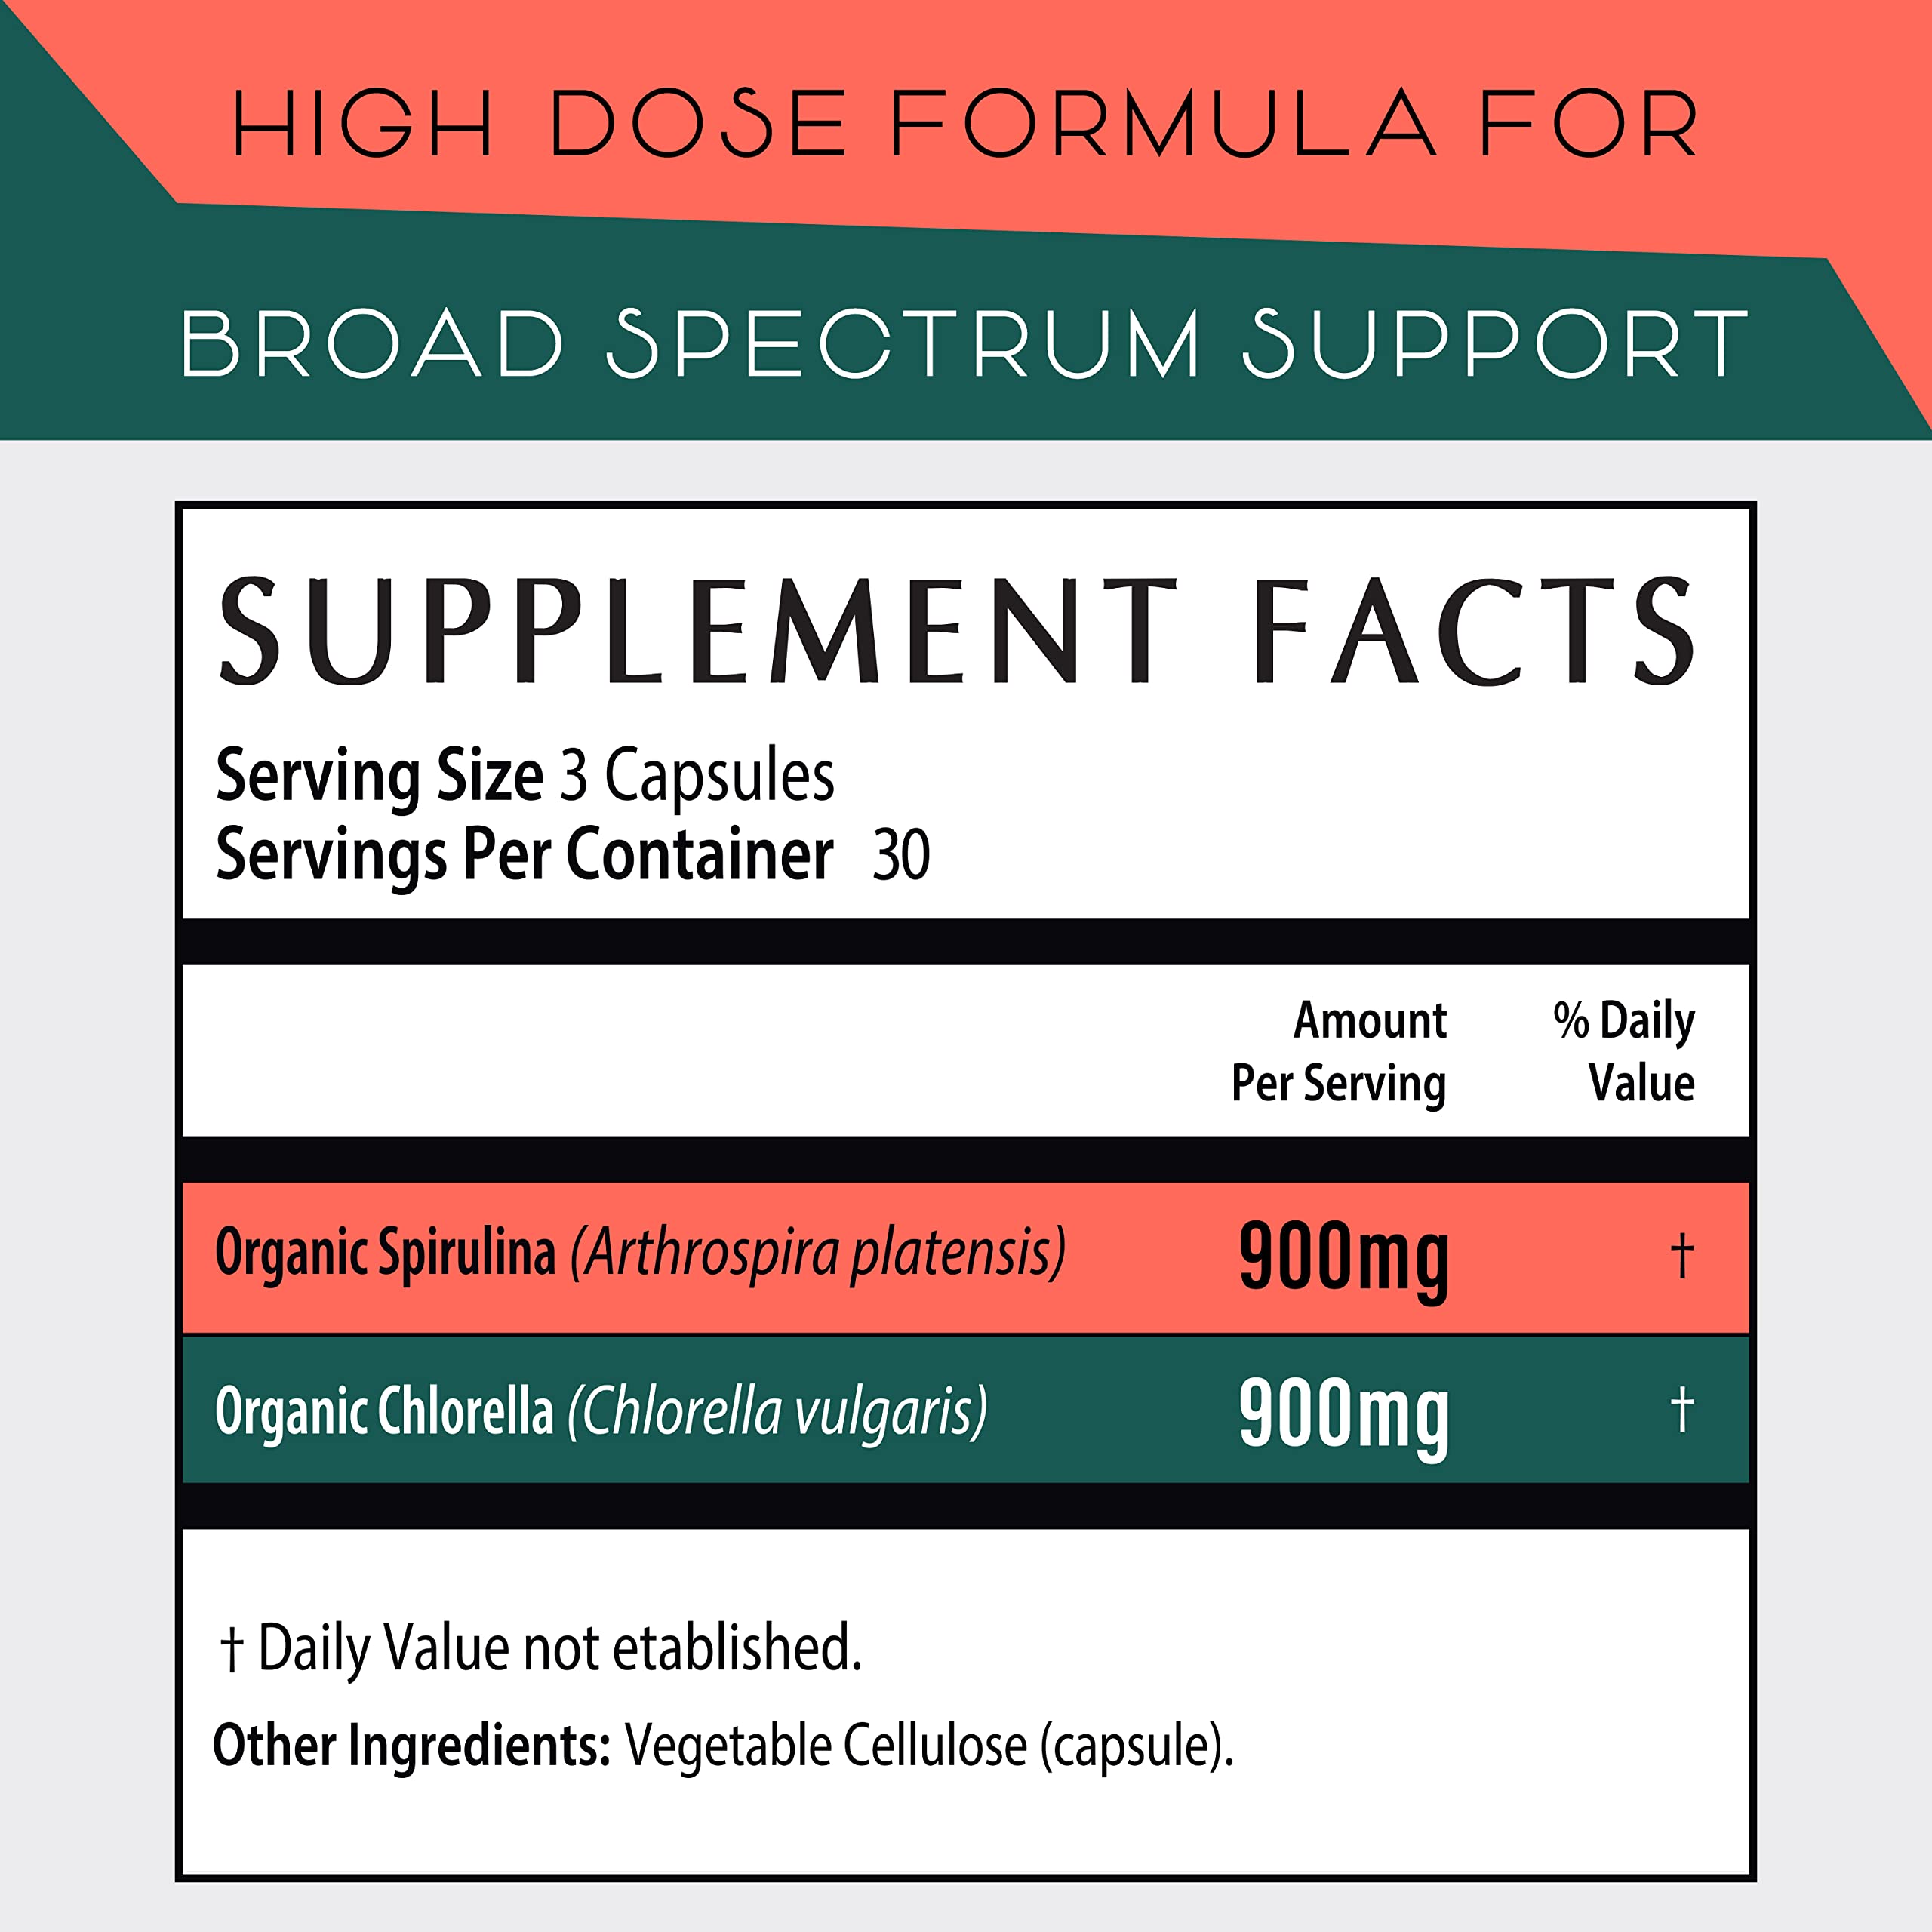 Teaveli Premium Spirulina Chlorella Capsules and Pharma GABA Supplement Bundle.